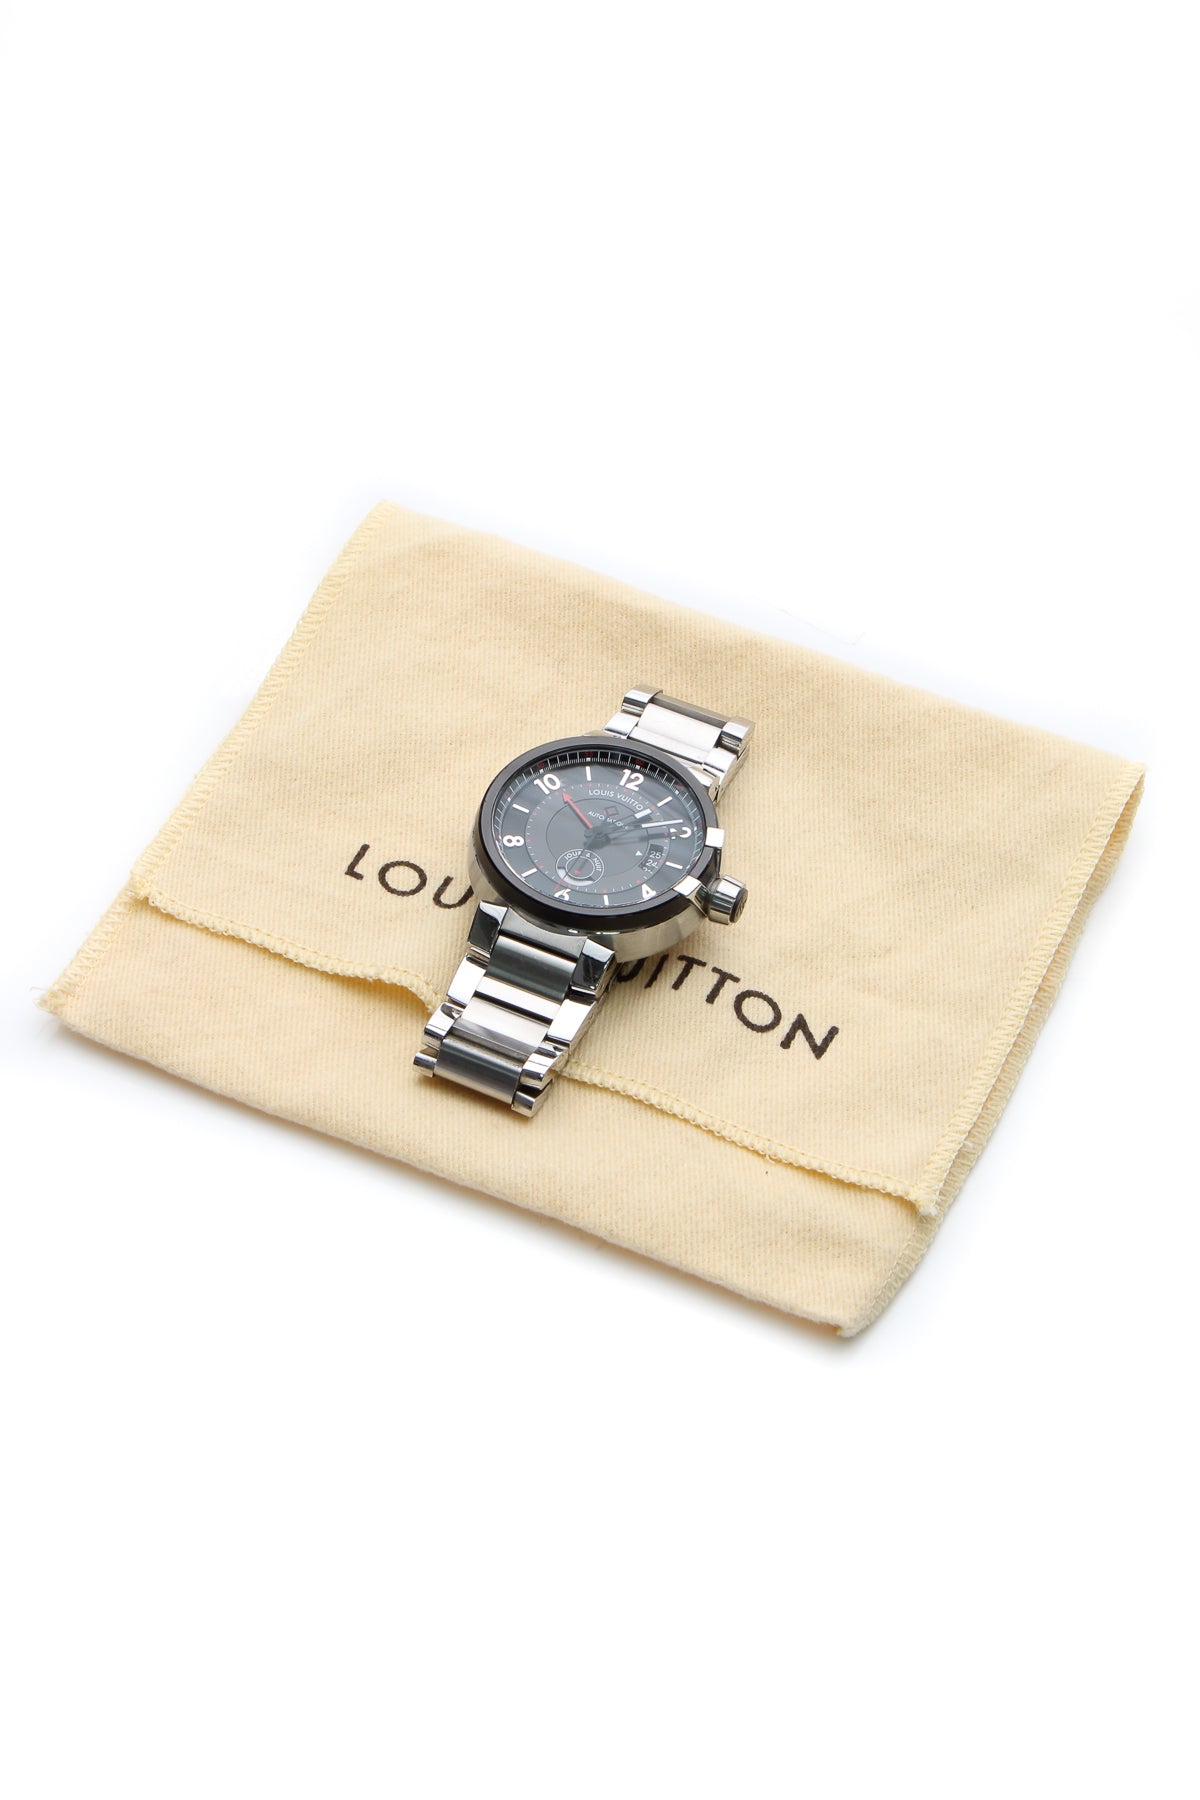 Louis Vuitton's New Tambour Evolution Watches